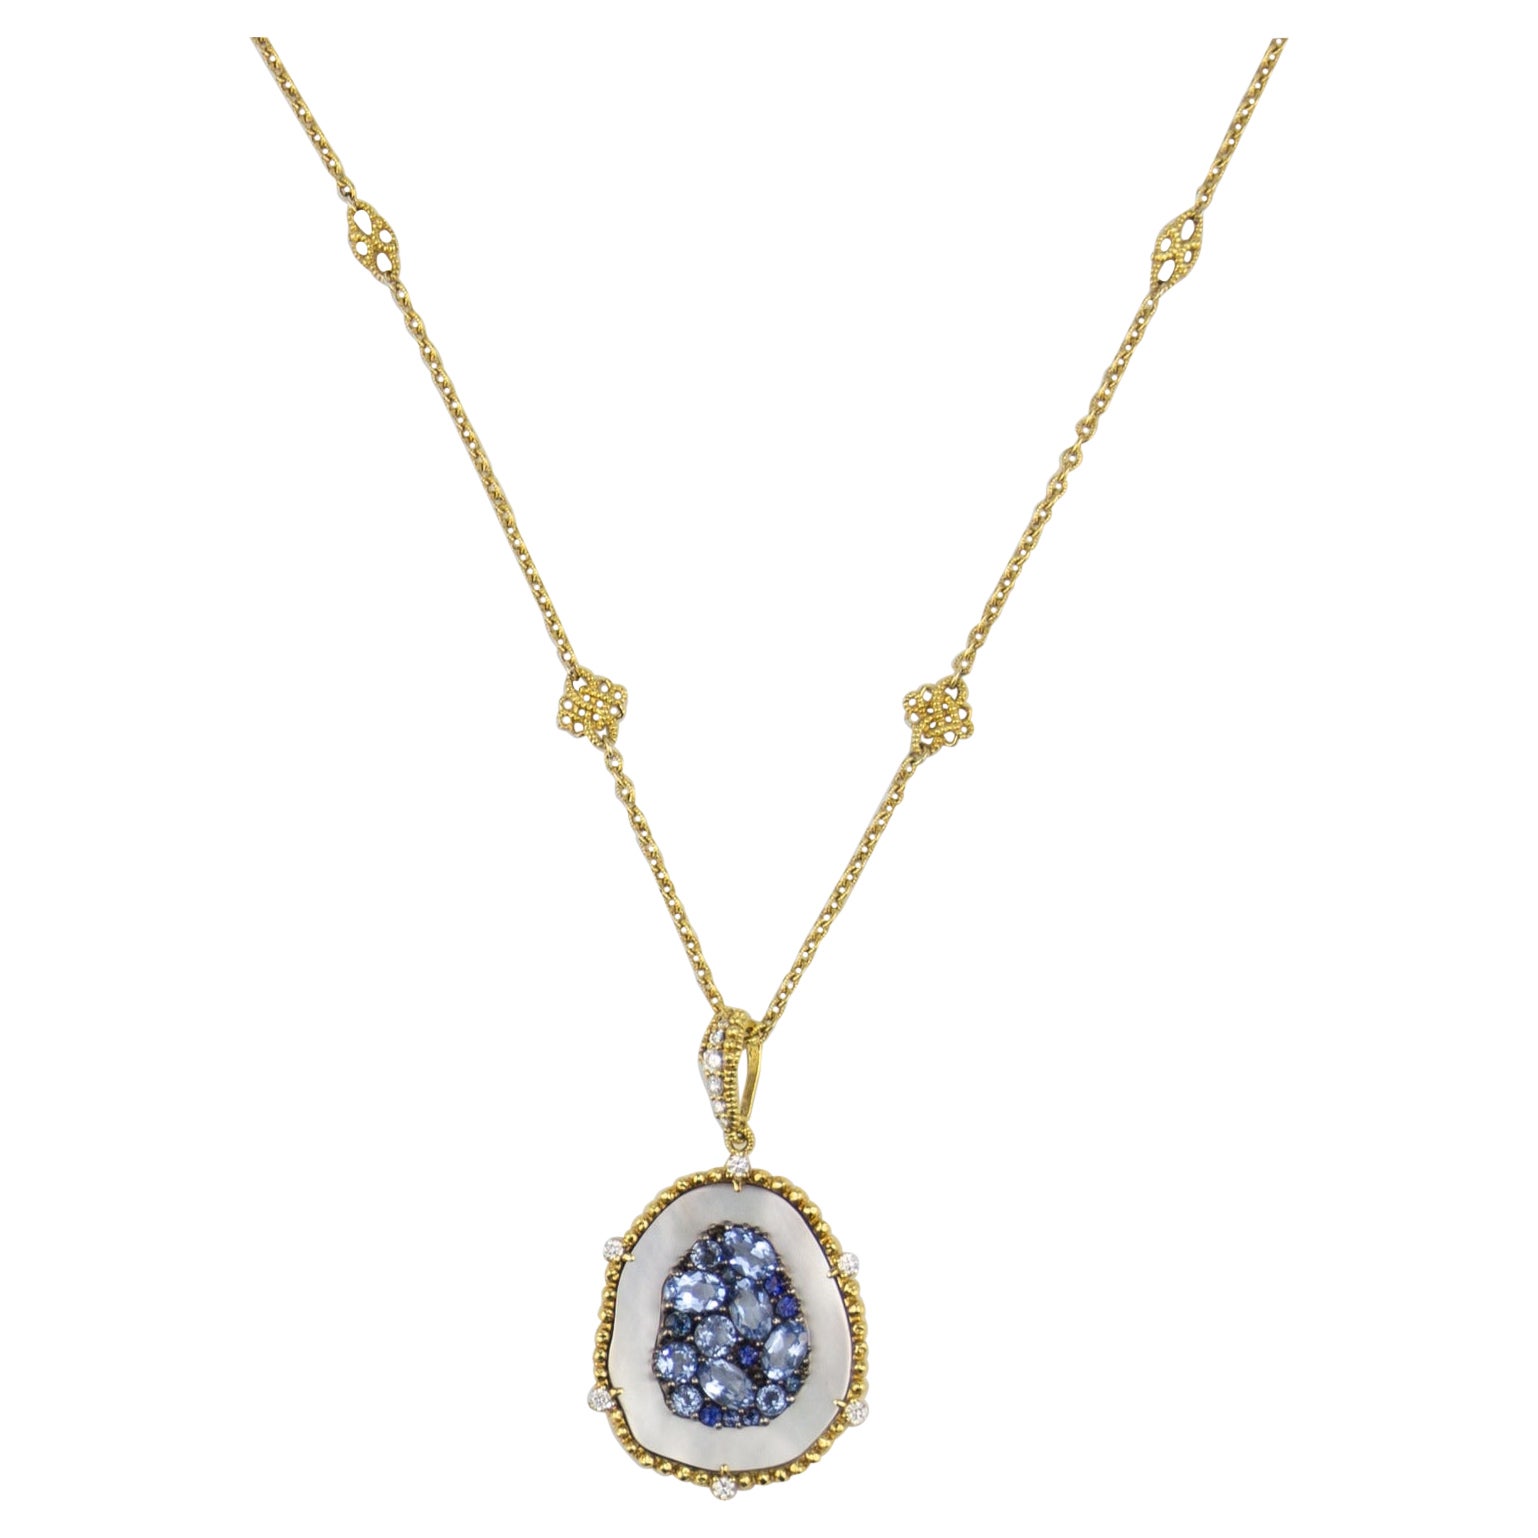 Judith Ripka, collier pendentif MOP en or jaune 18 carats, quartz et saphir